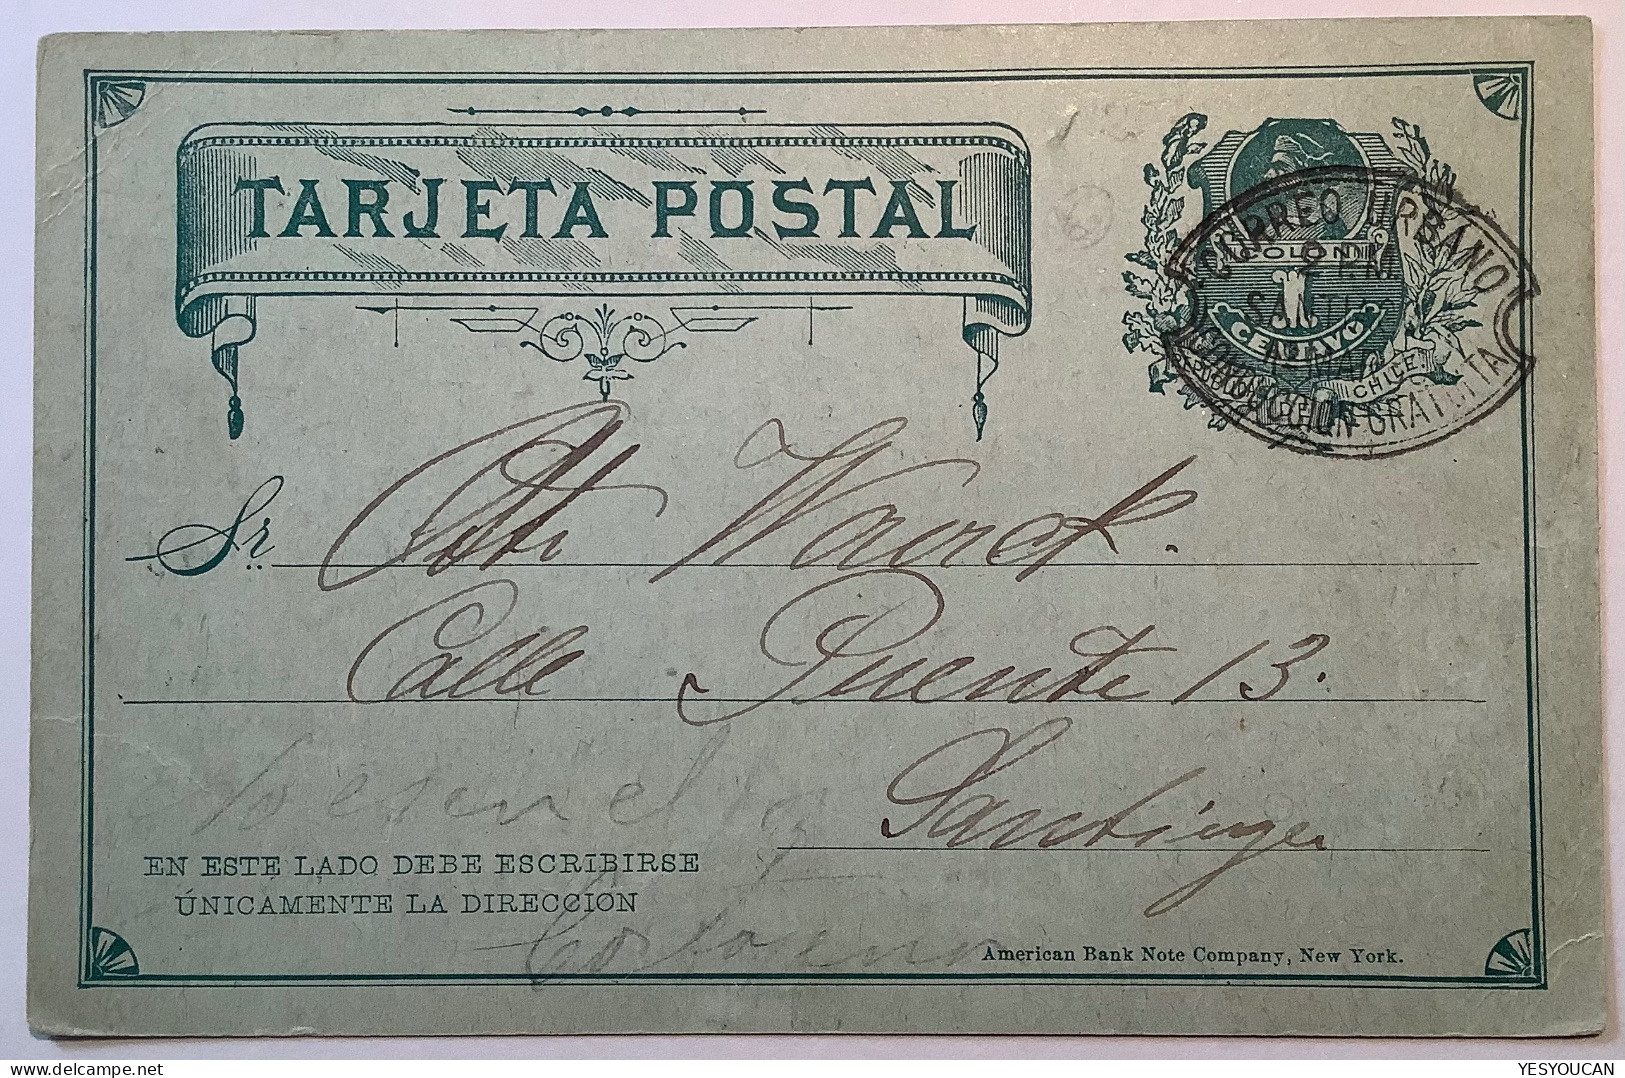 ADVERTISEMENT DEUTSCHE KRANKENKASSE~1897Santiago Chile1c Postal Stationery Card„CORREO URBANO“(health Assurance Santé - Chili